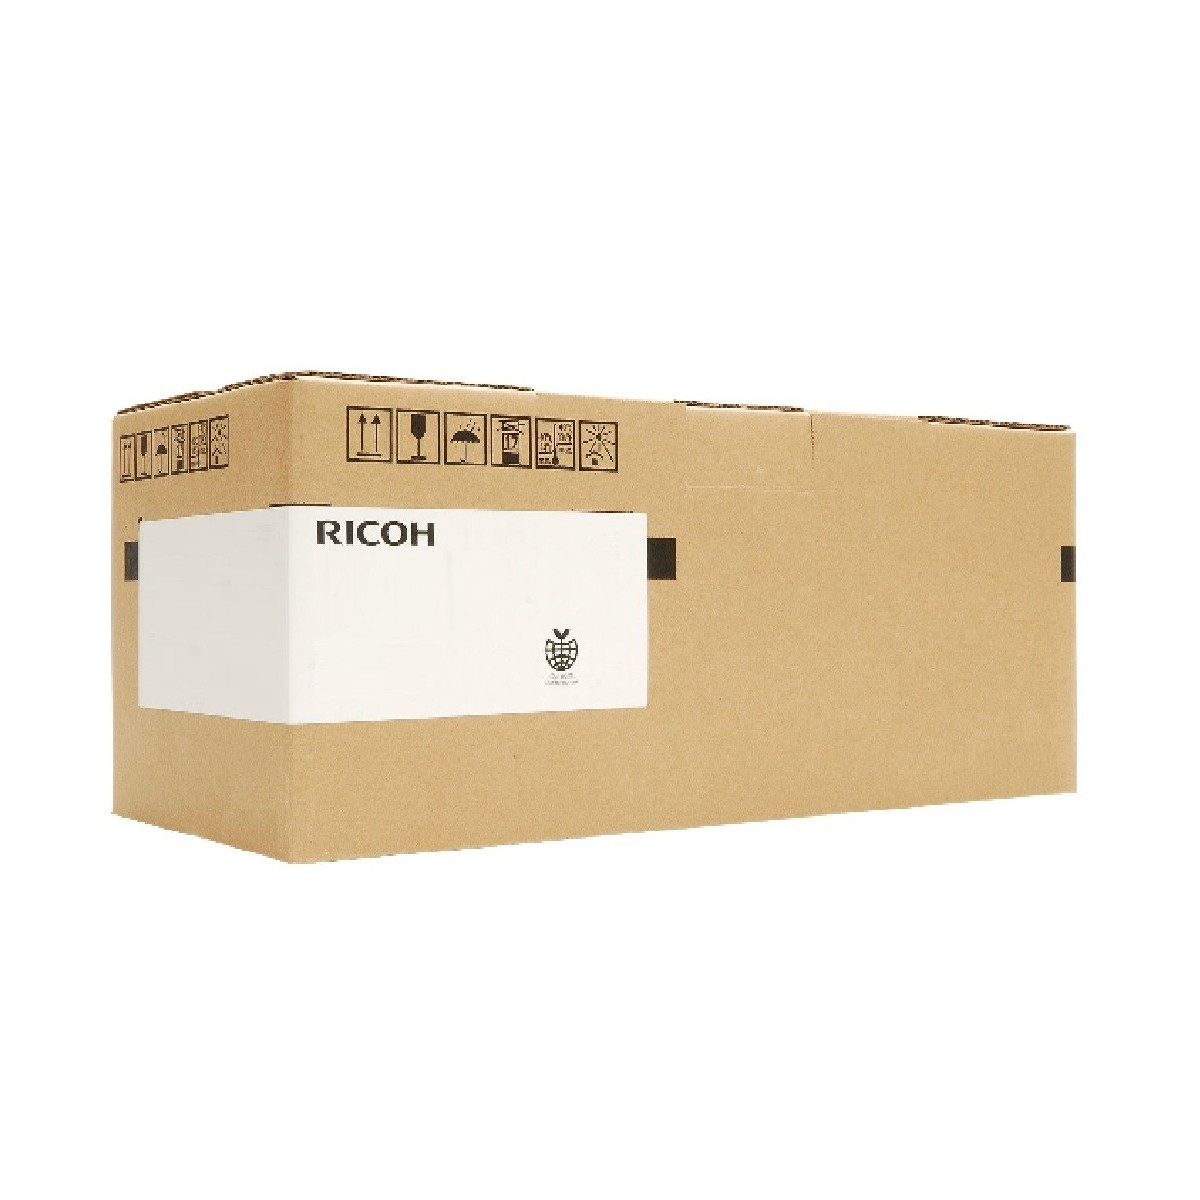 Ricoh D0892251 - Original - Ricoh - MPC3001 / MPC3501 / MPC4501 / MPC5501 - 1 pc(s) - Cyan - Magenta - Yellow - 700 g